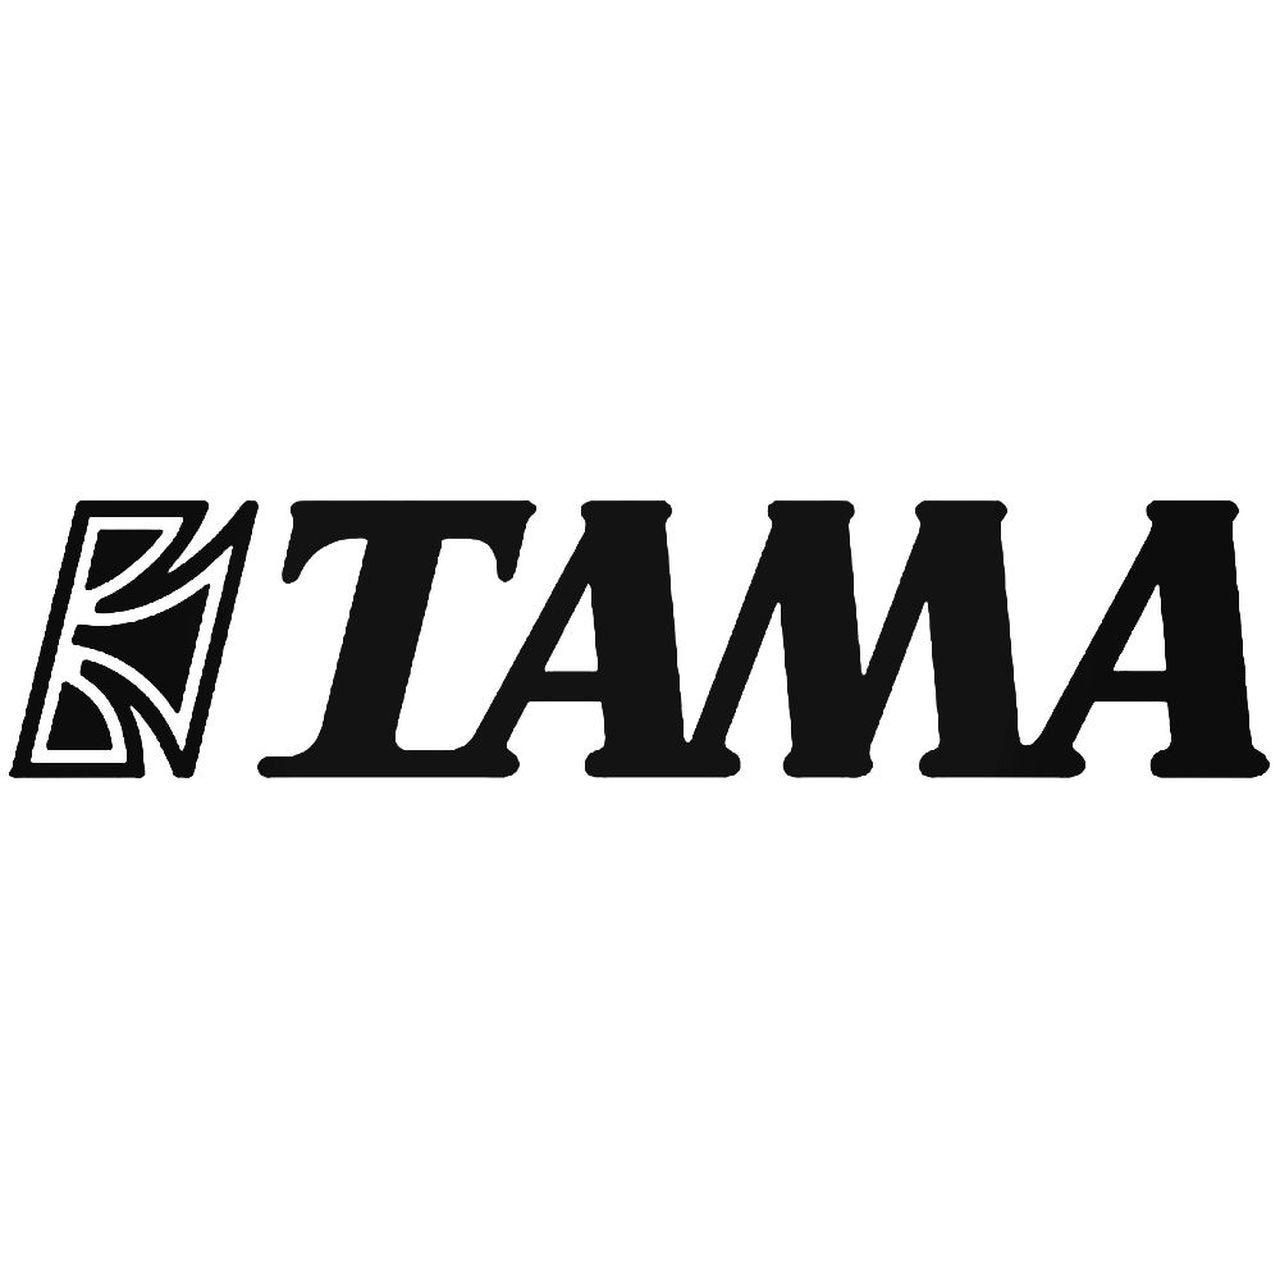 Drum Logo - Tama Drums Logo Vinyl Decal Sticker